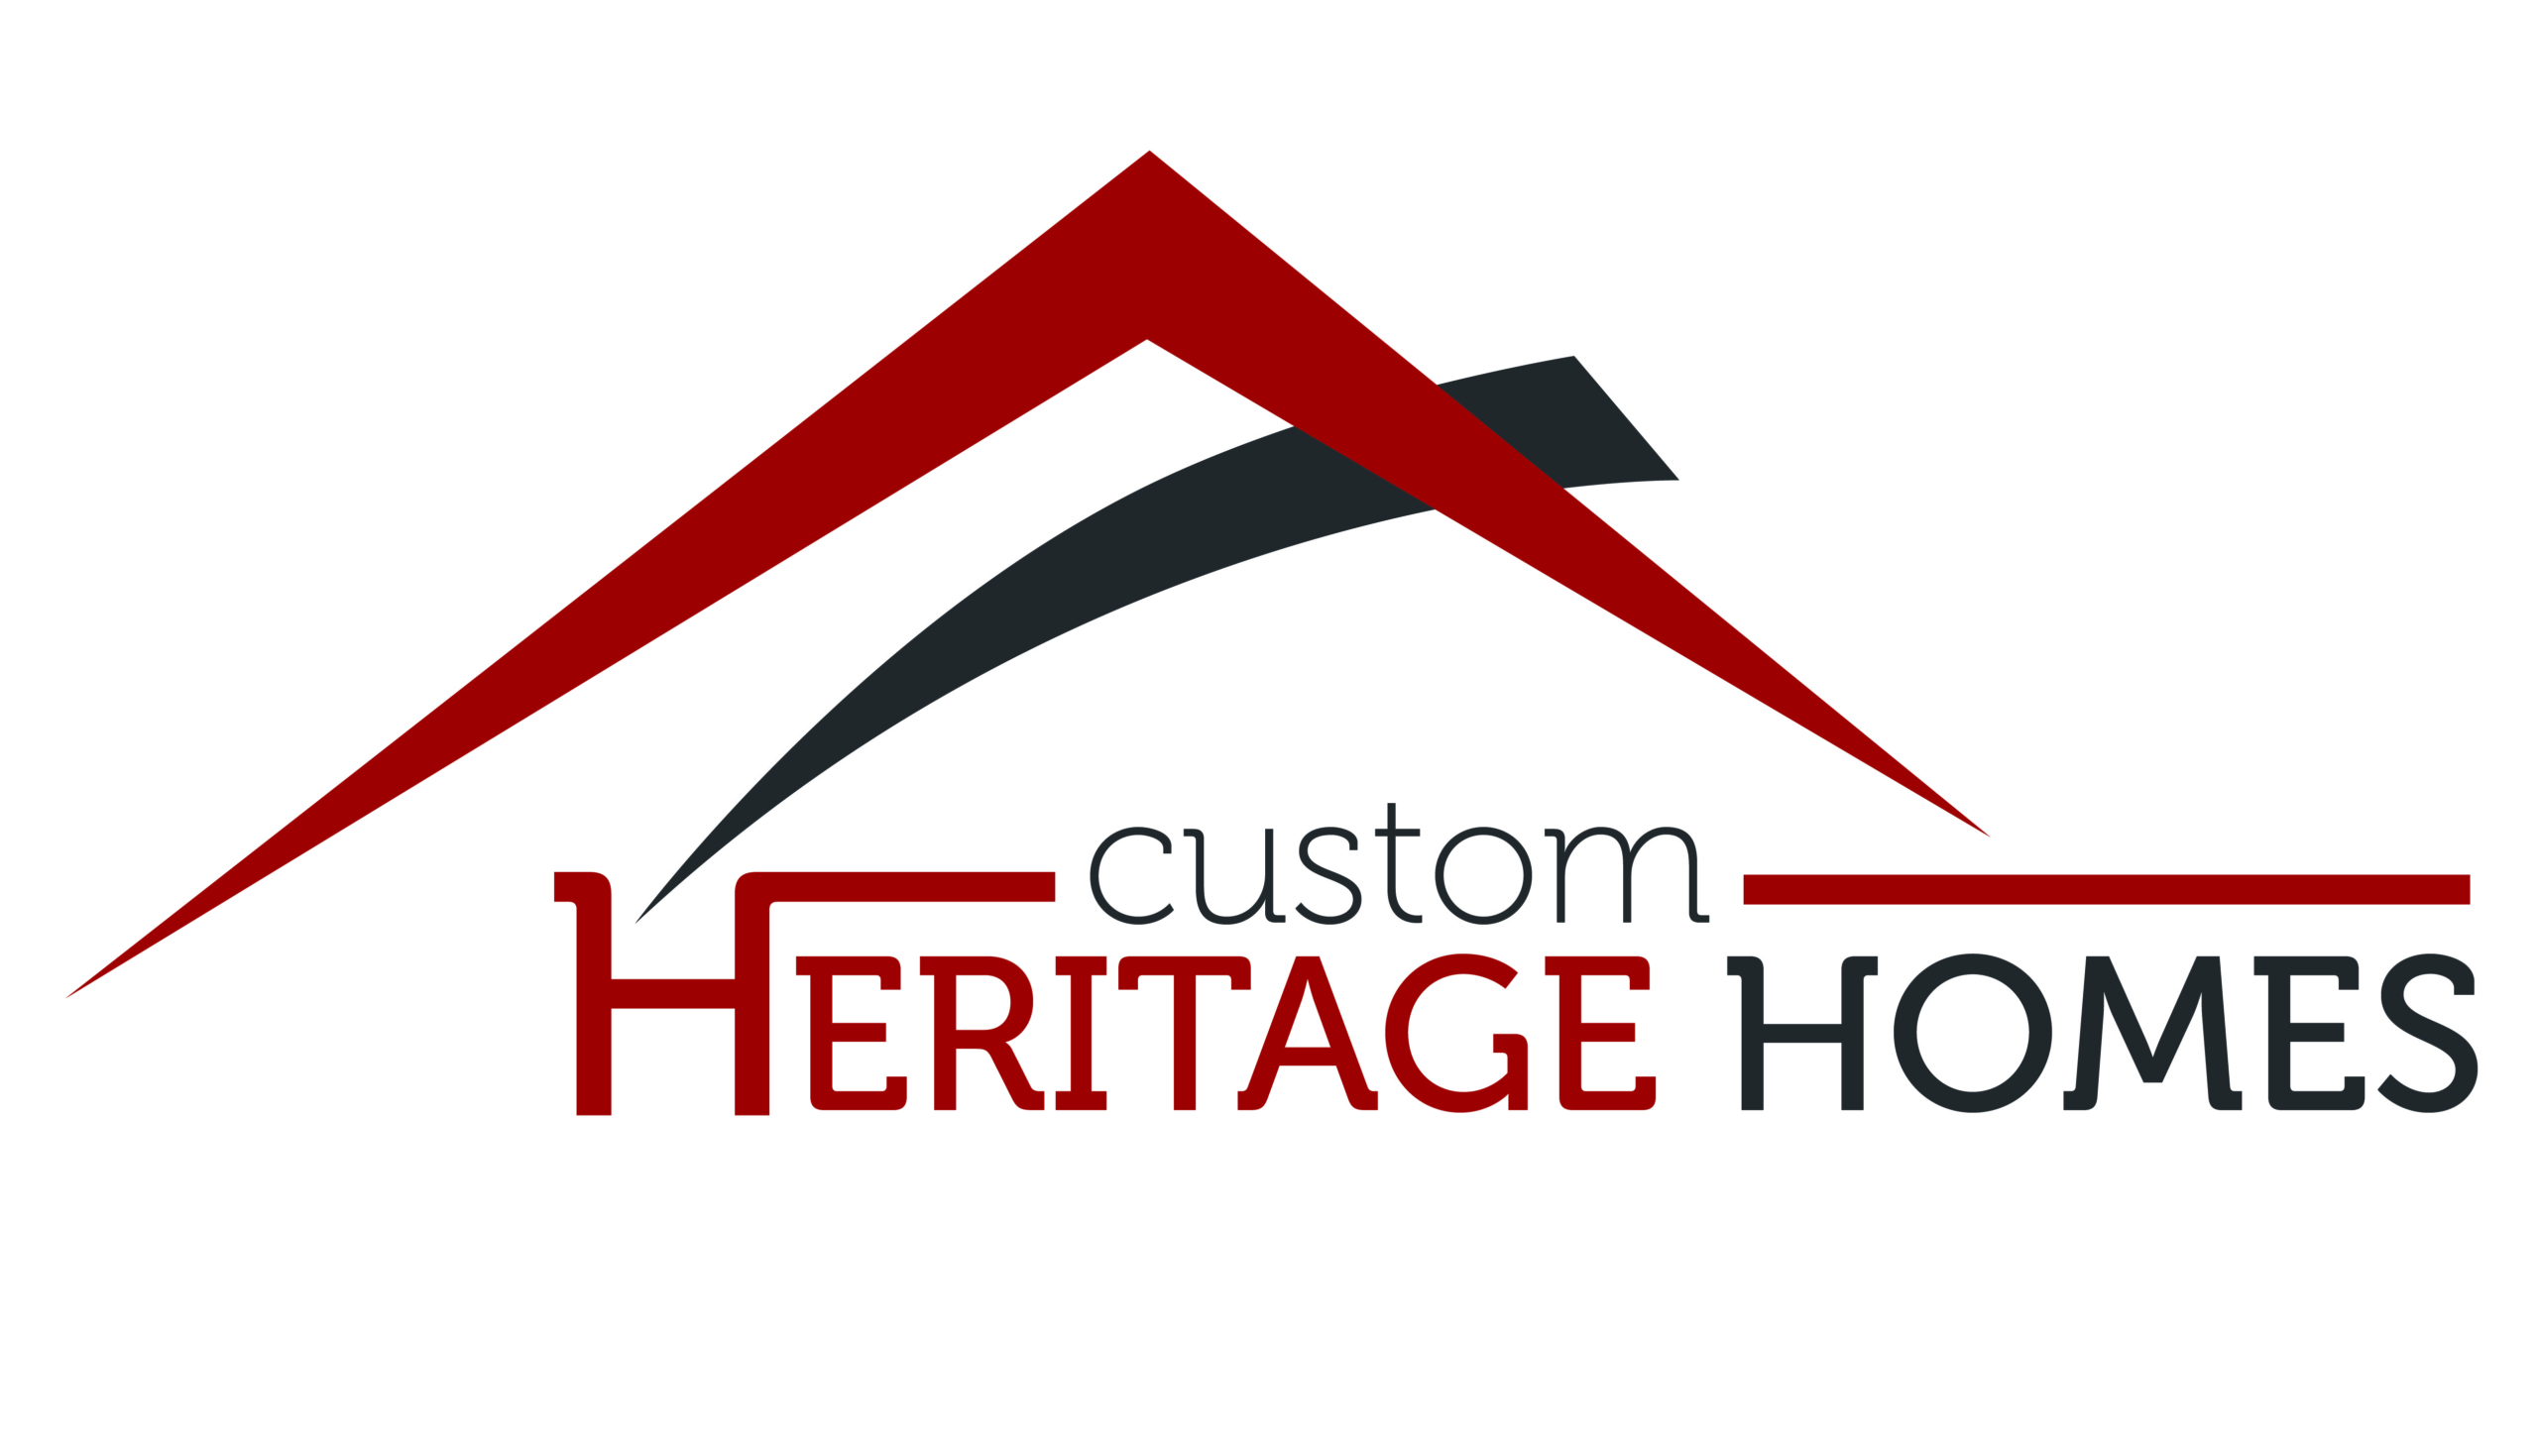 Heritage Homes Logo